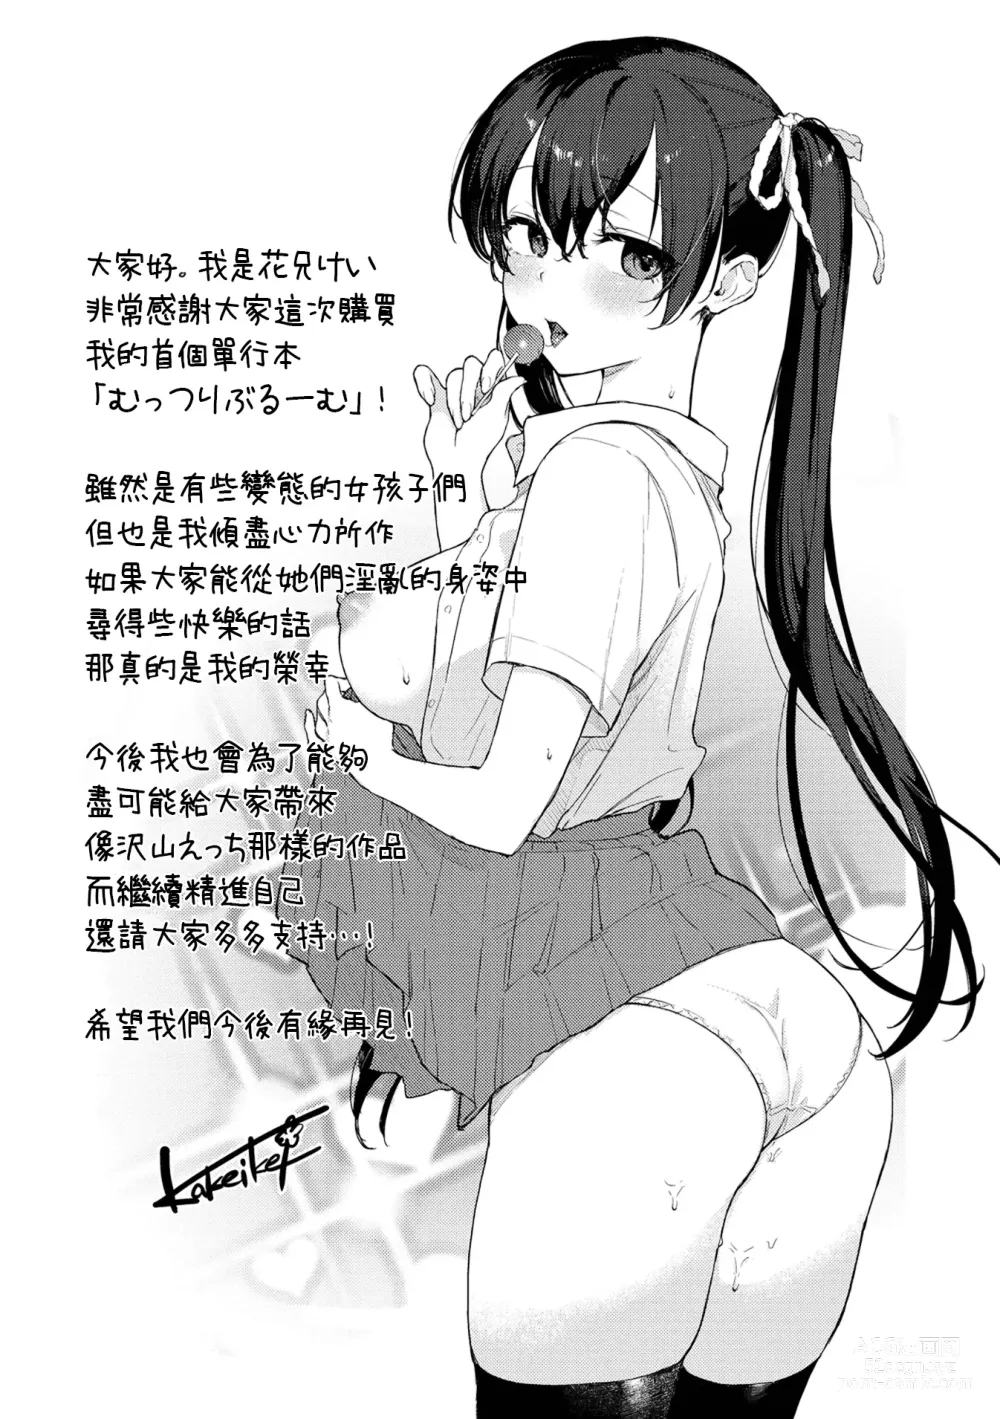 Page 212 of manga Muttsuri Bloom